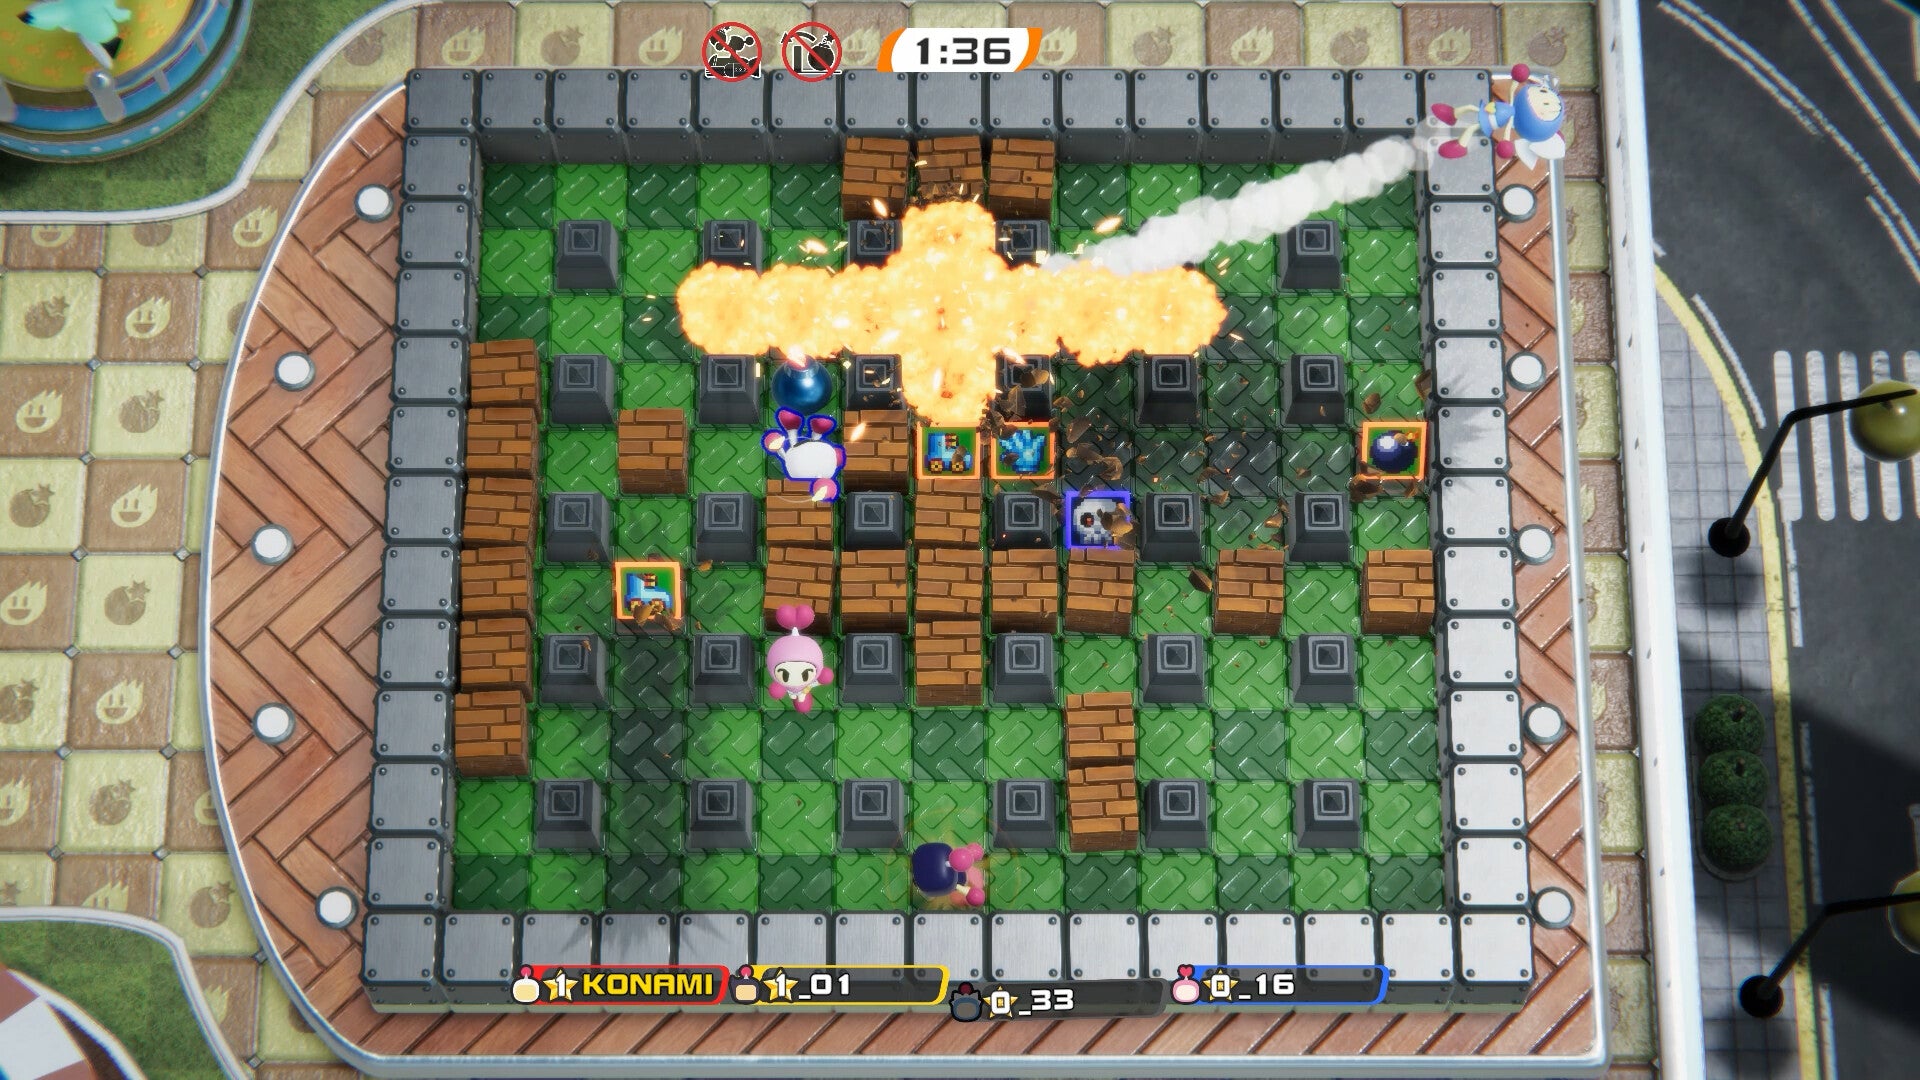 Super Bomberman R Ps4 Gameplay 